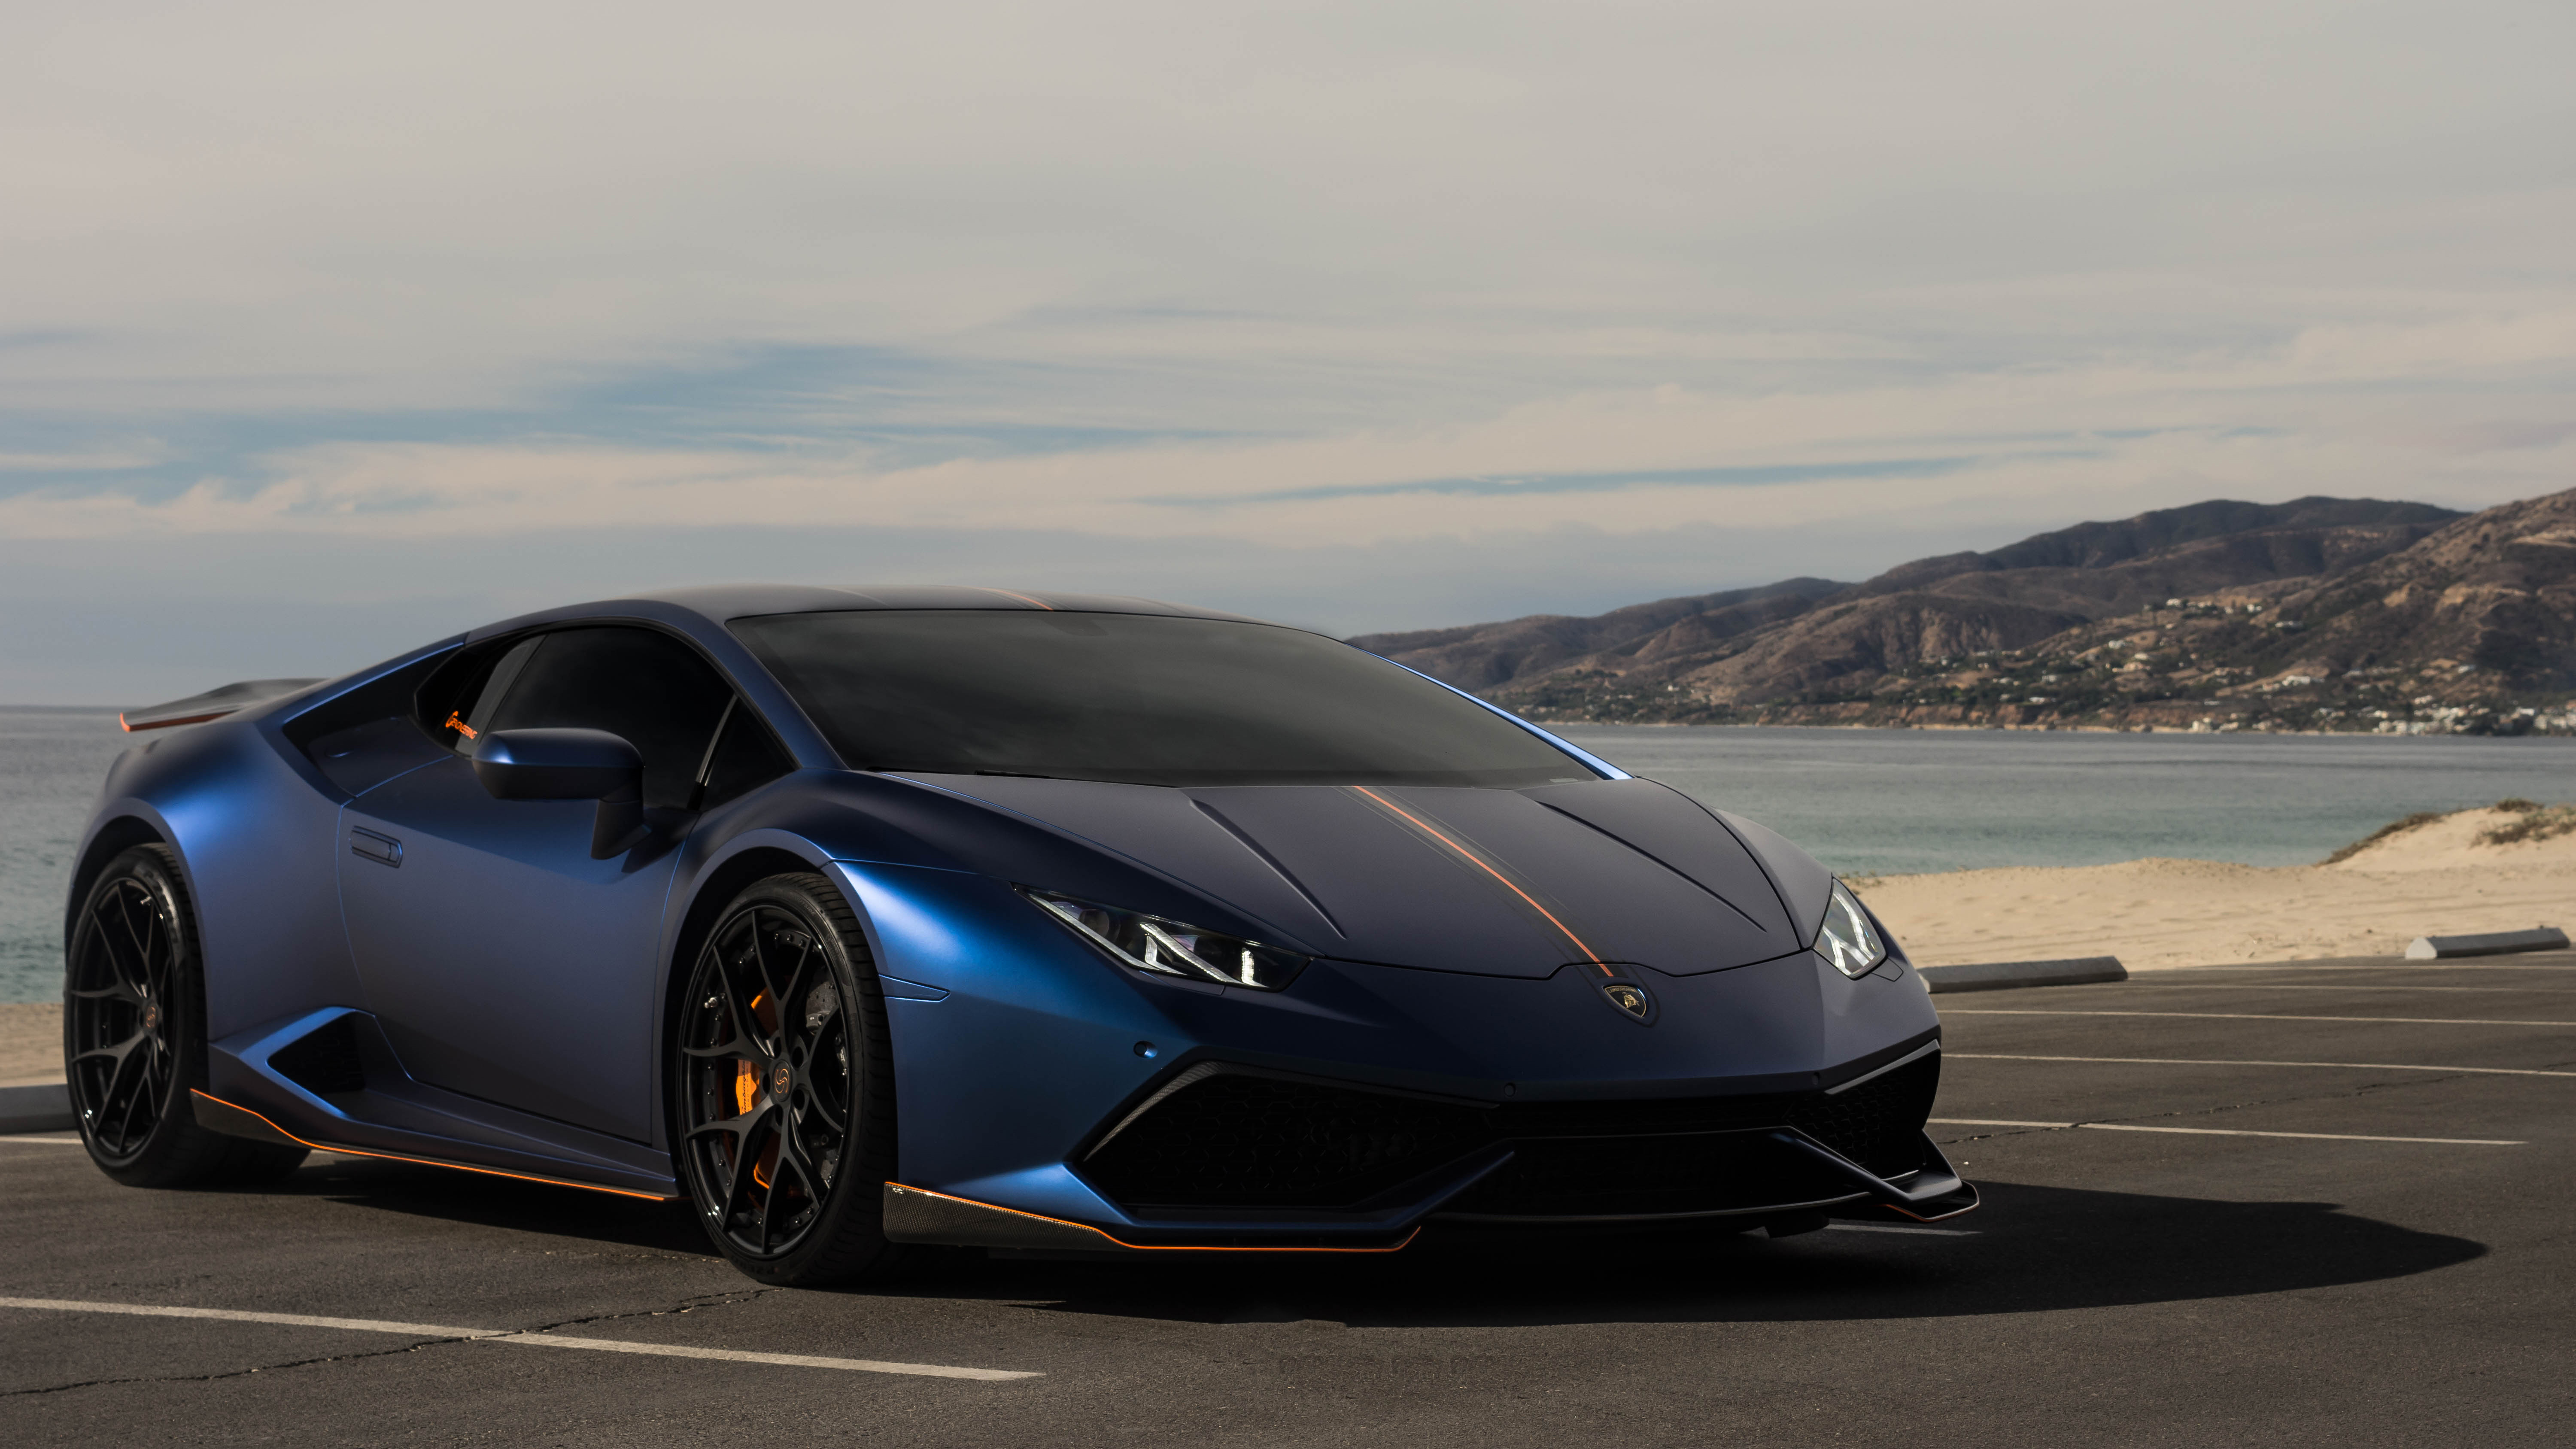 Lamborghini Huracan 5k New, HD Cars, 4k Wallpapers, Images, Backgrounds ...